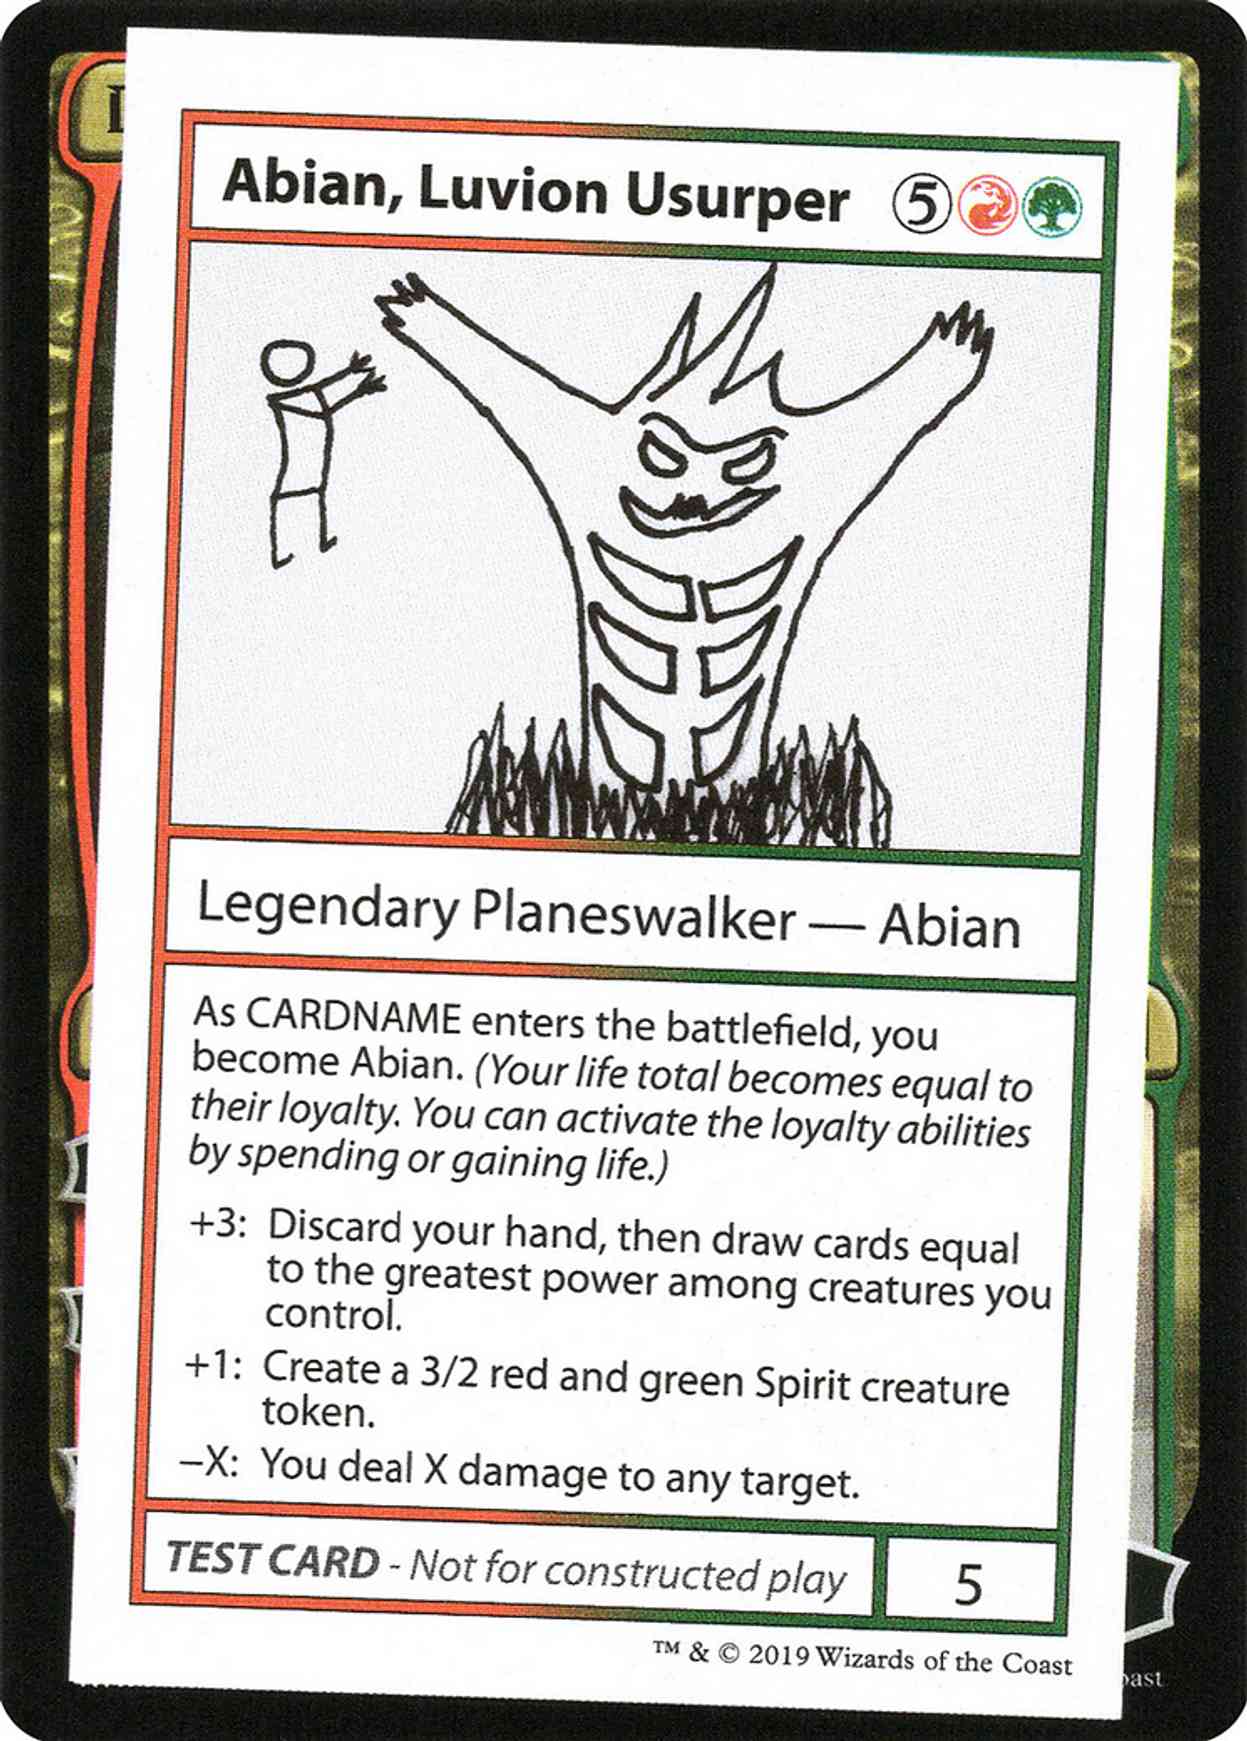 Abian, Luvion Usurper (No PW Symbol) magic card front